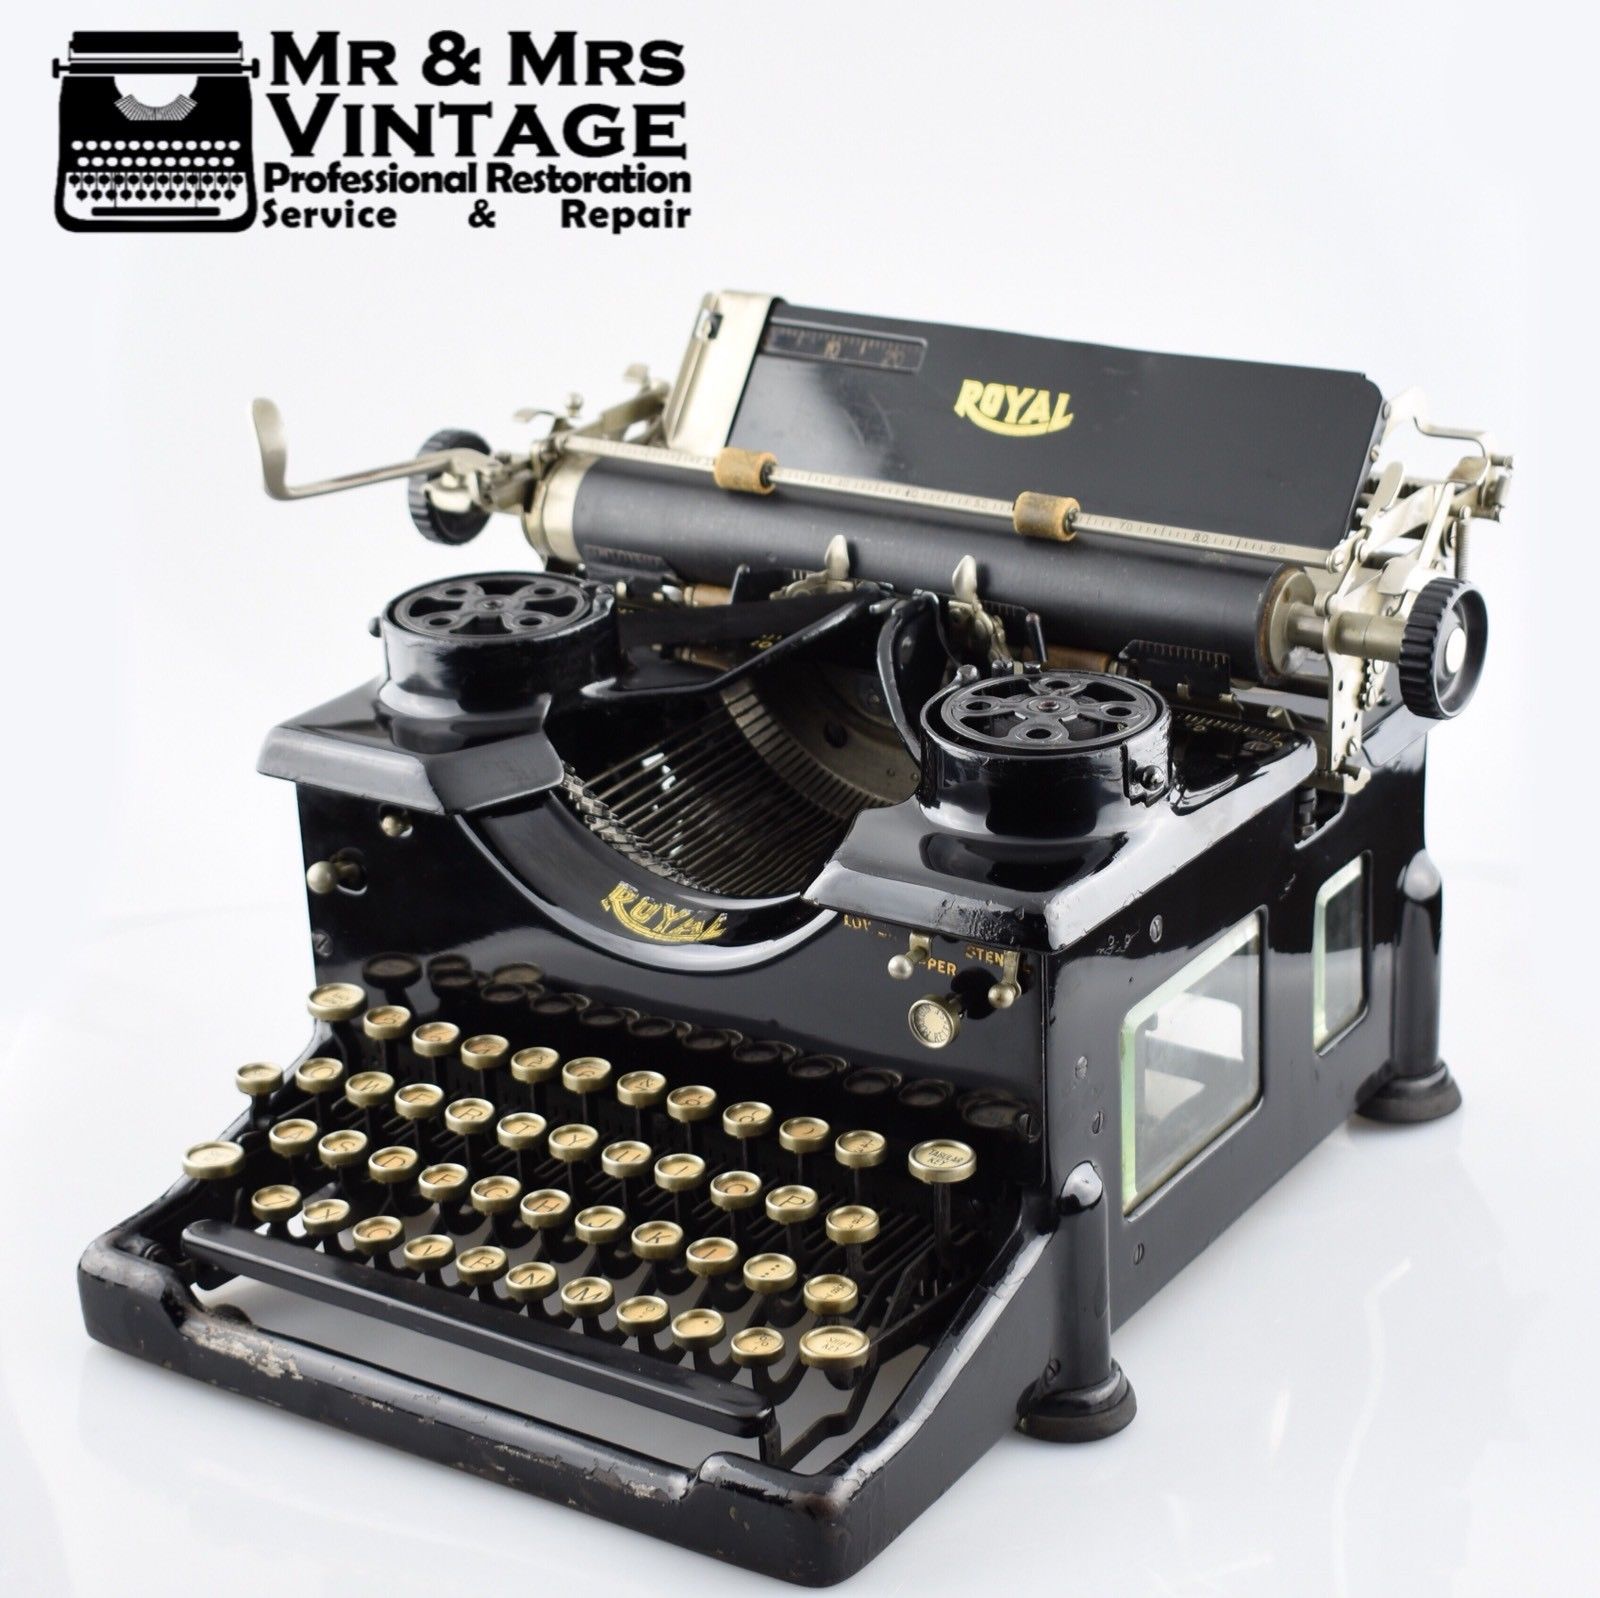 Royal 10 Typewriter in Glossy Black – Mr u0026 Mrs Vintage Typewriters ltd